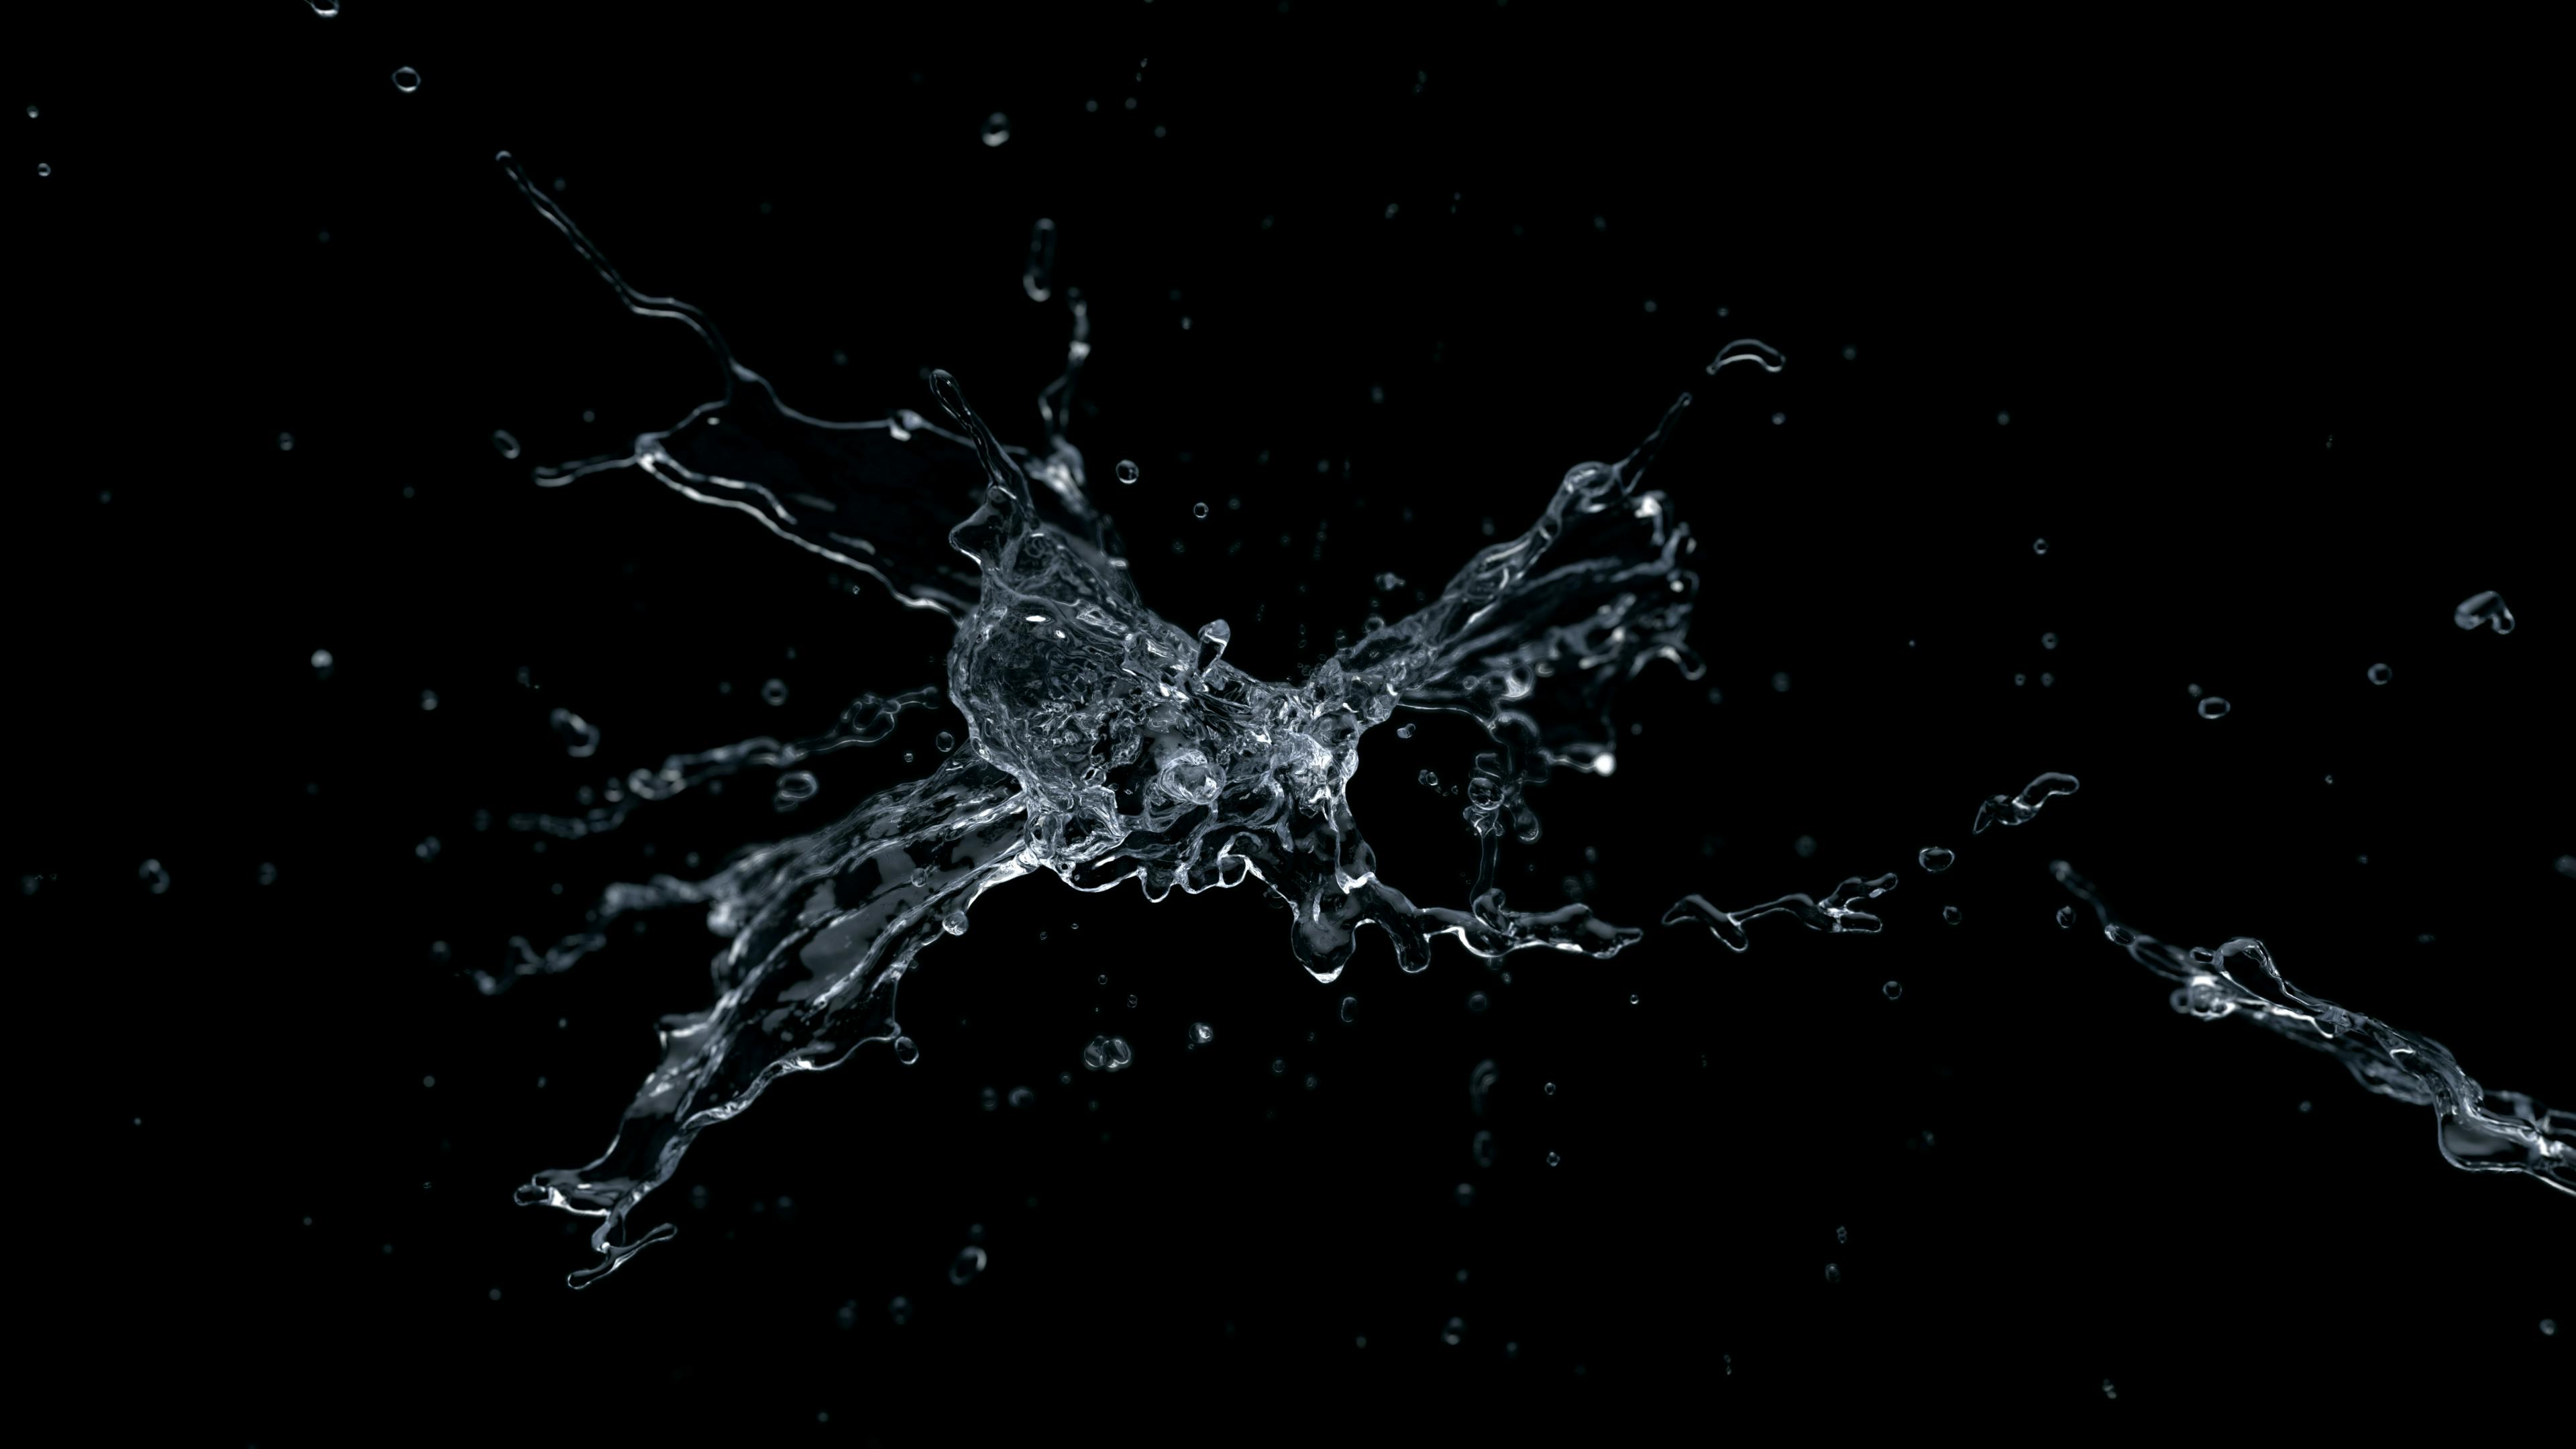 Splash of Water on Black Background · Free Stock Photo